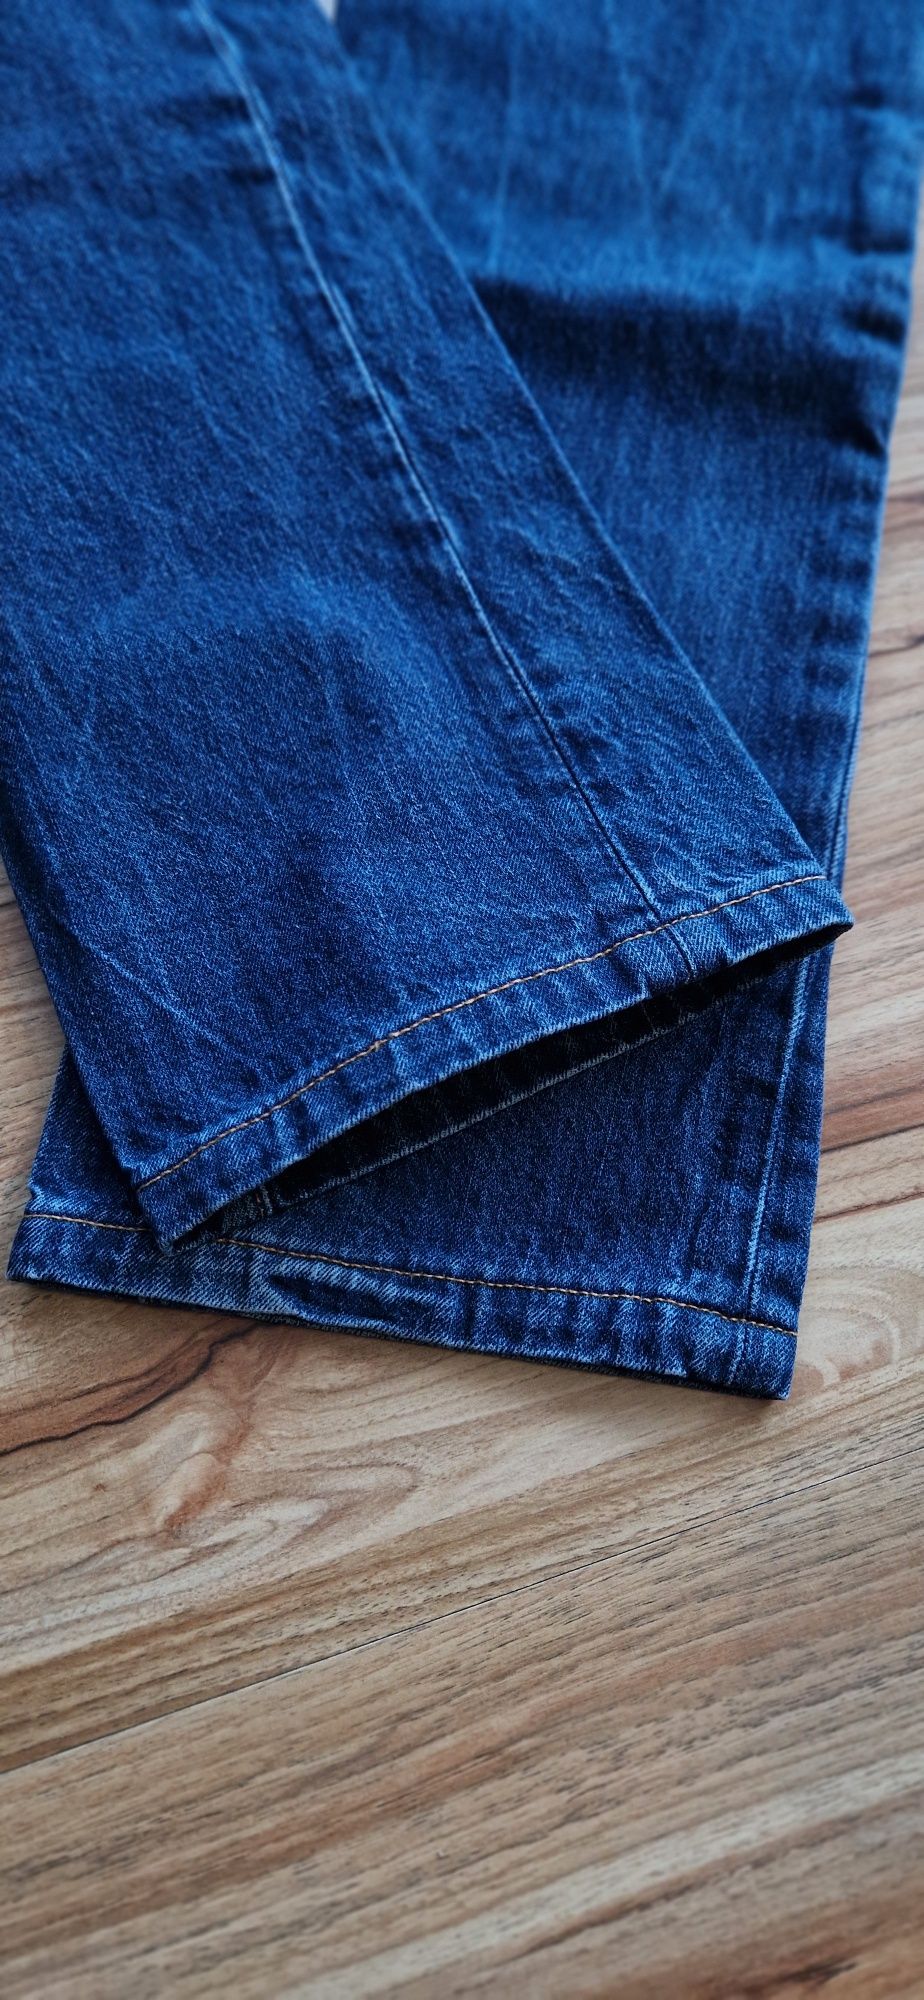 LEVIS 501 32/34 spodnie jeansy męskie